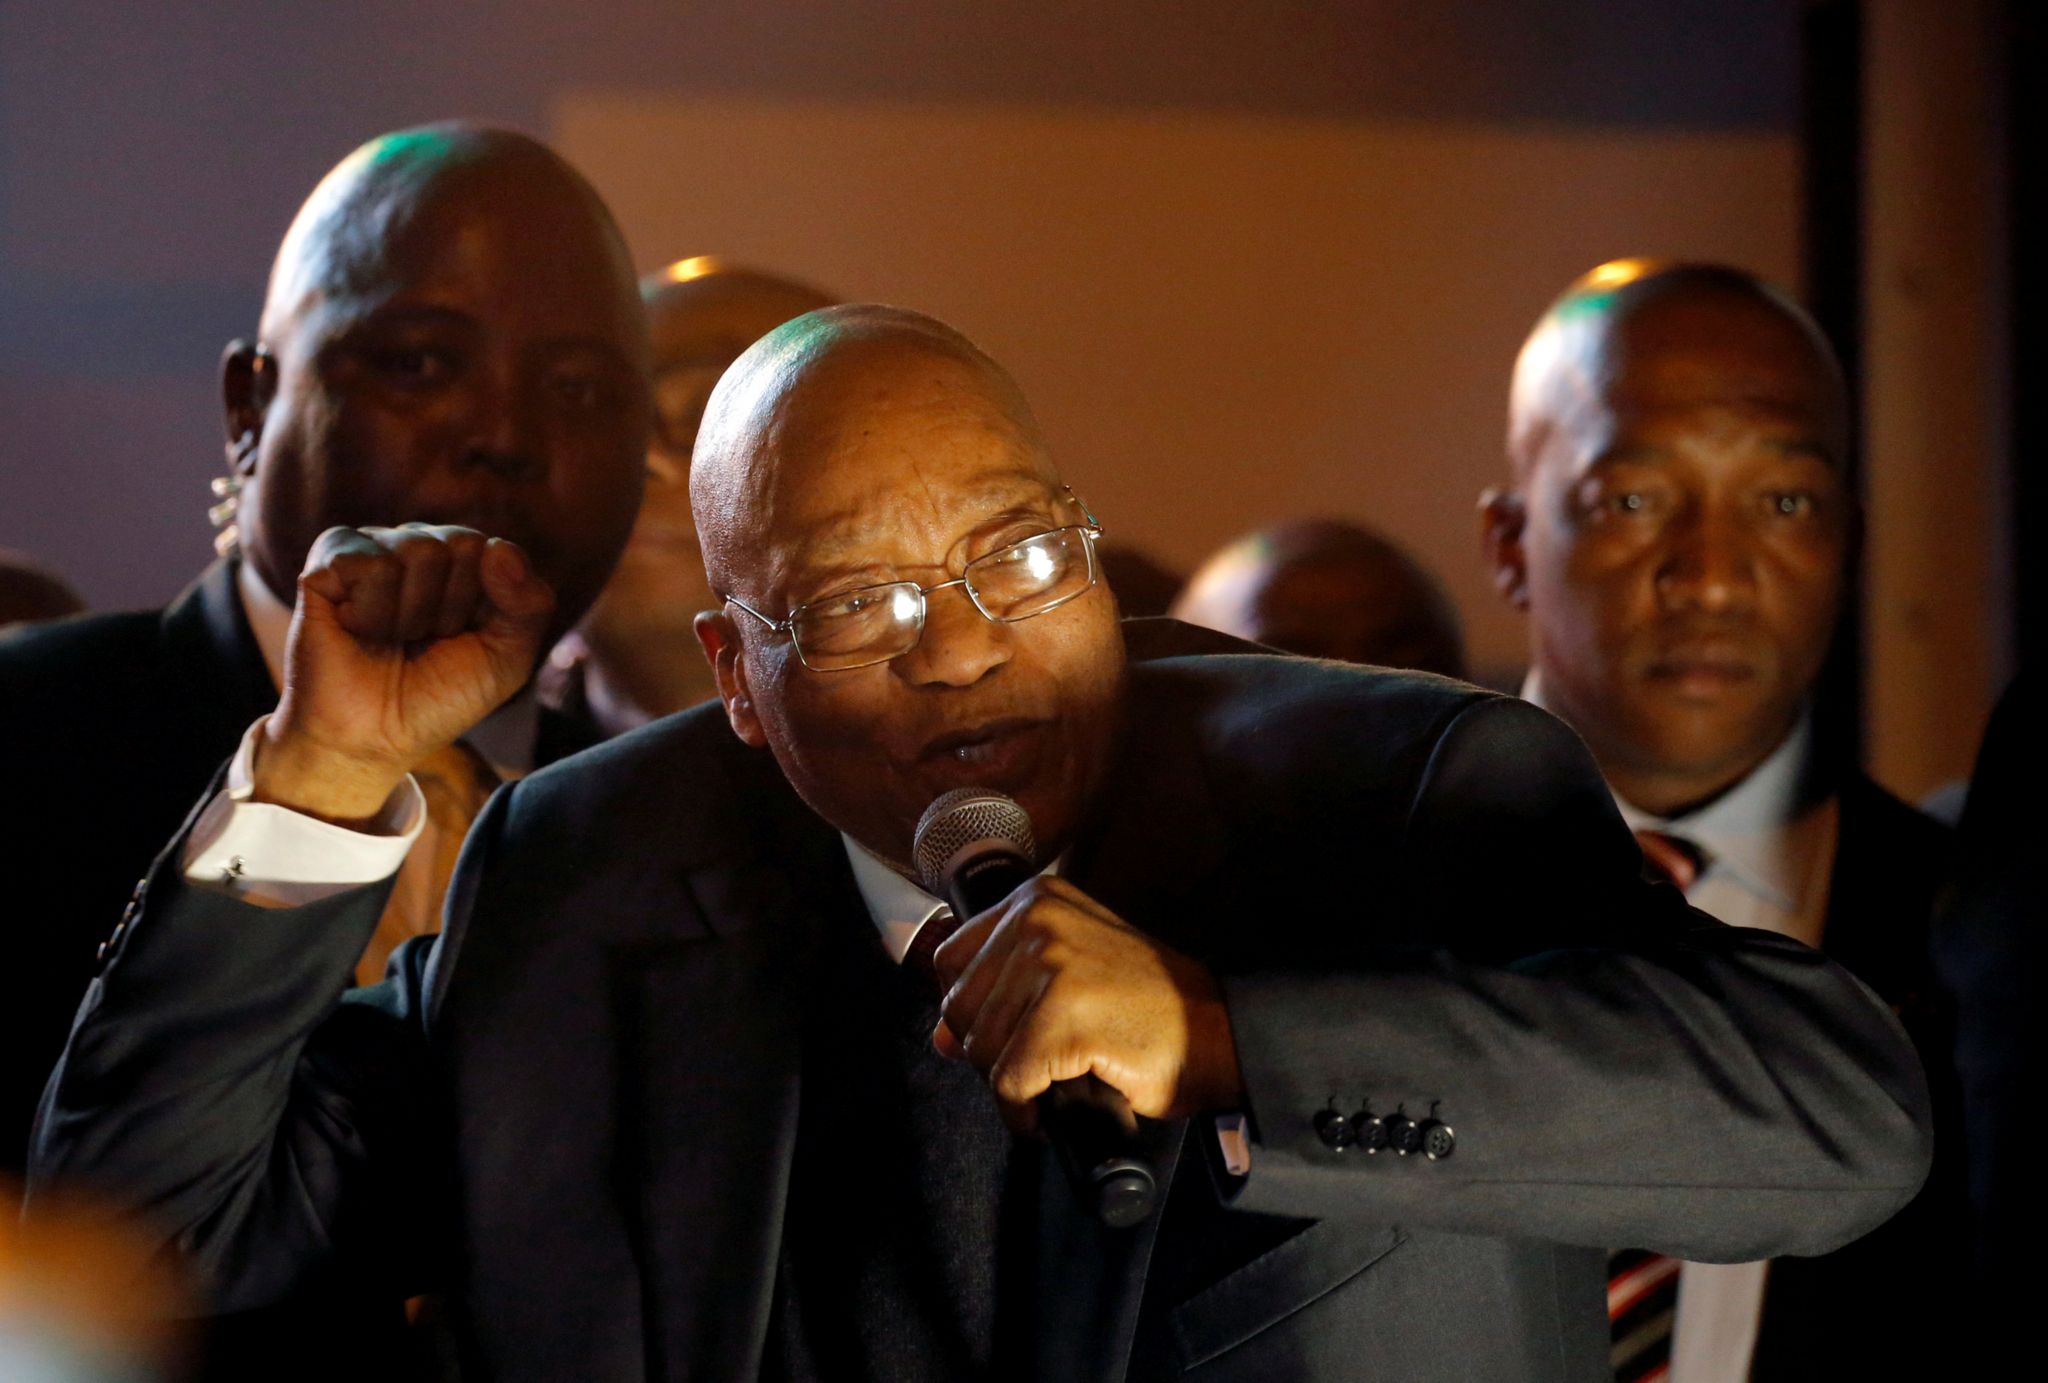 President Zuma pumps his fist in celebration